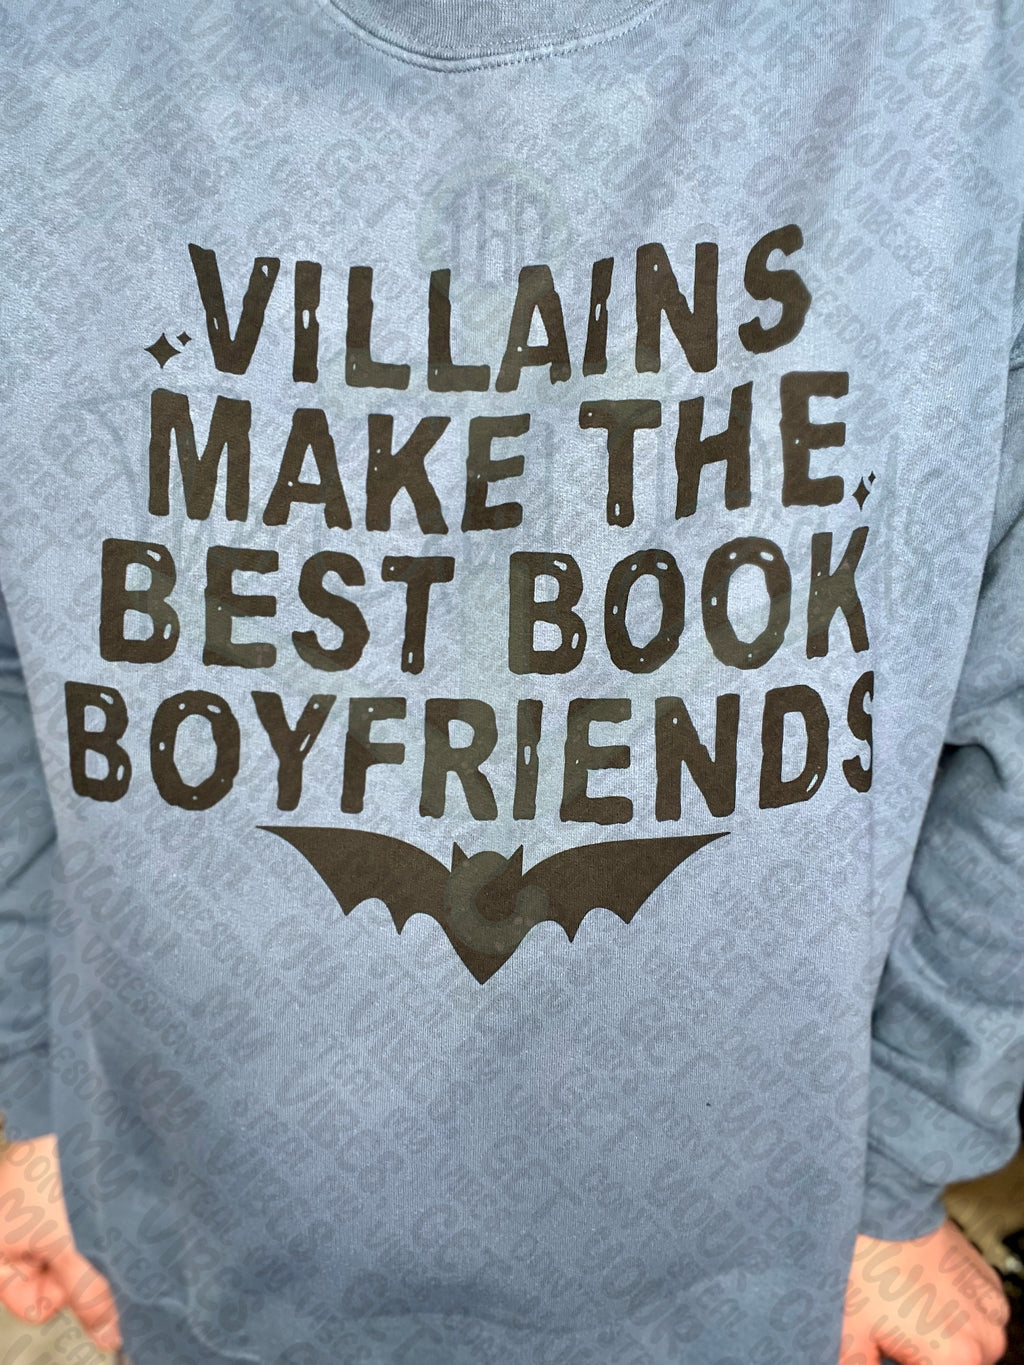 Villains Make The Best Book Boyfriends Top Design